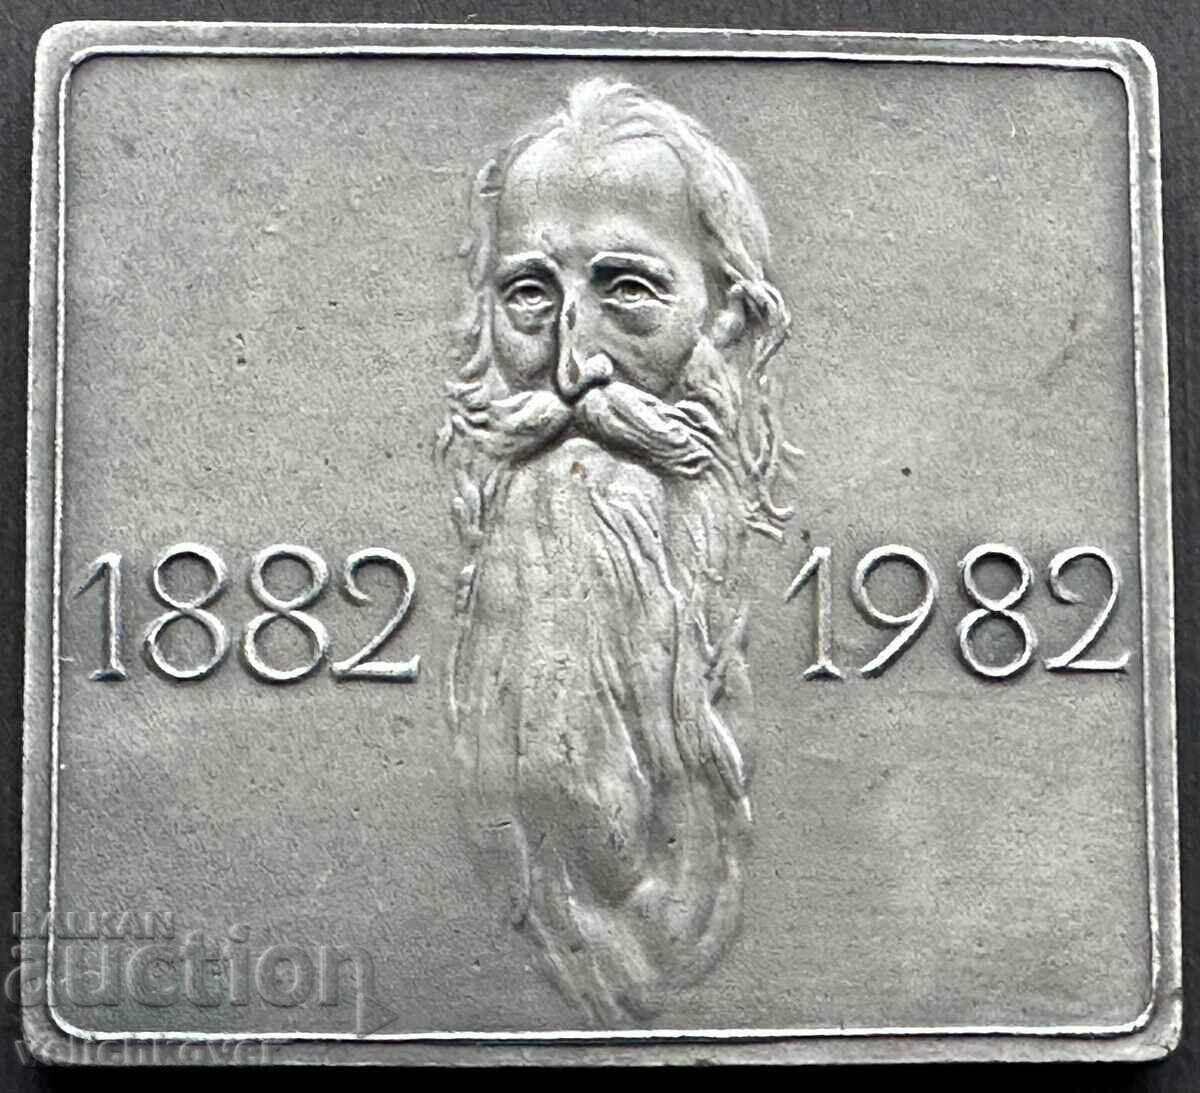 36143 Bulgaria plaque 100 years. Vladimir Dimitrov Master 1982